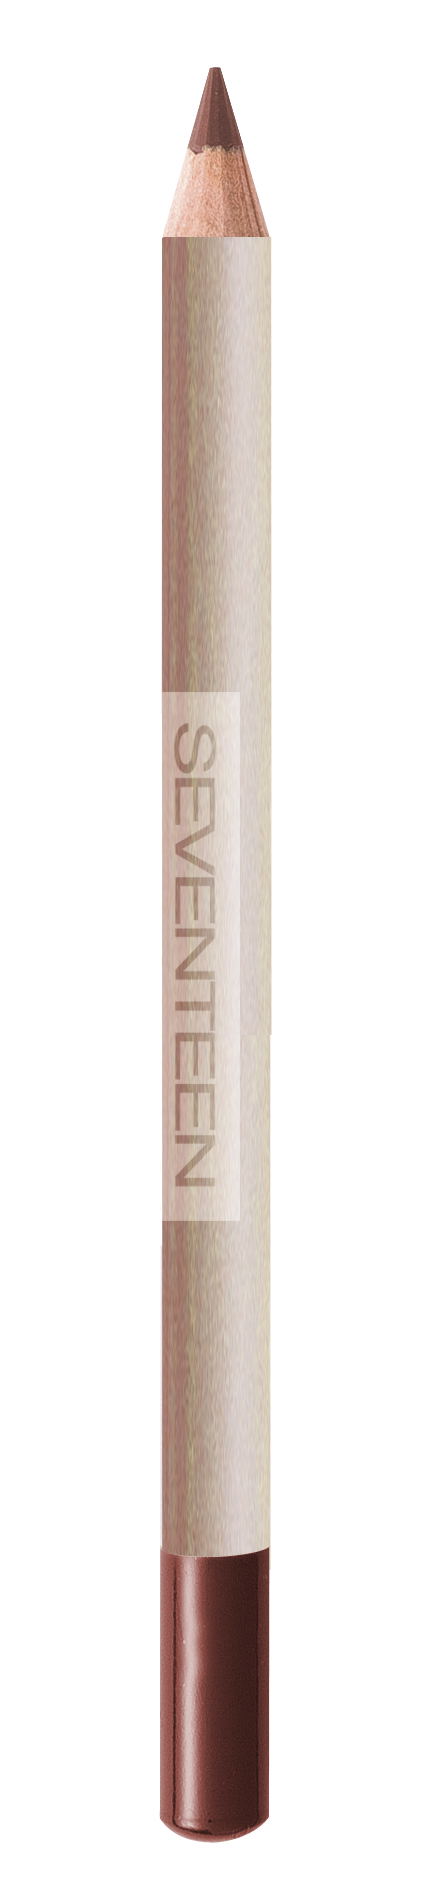 Карандаш для губ устойчивый Longstay Lip Shaper Pencil, 01 зимняя роза